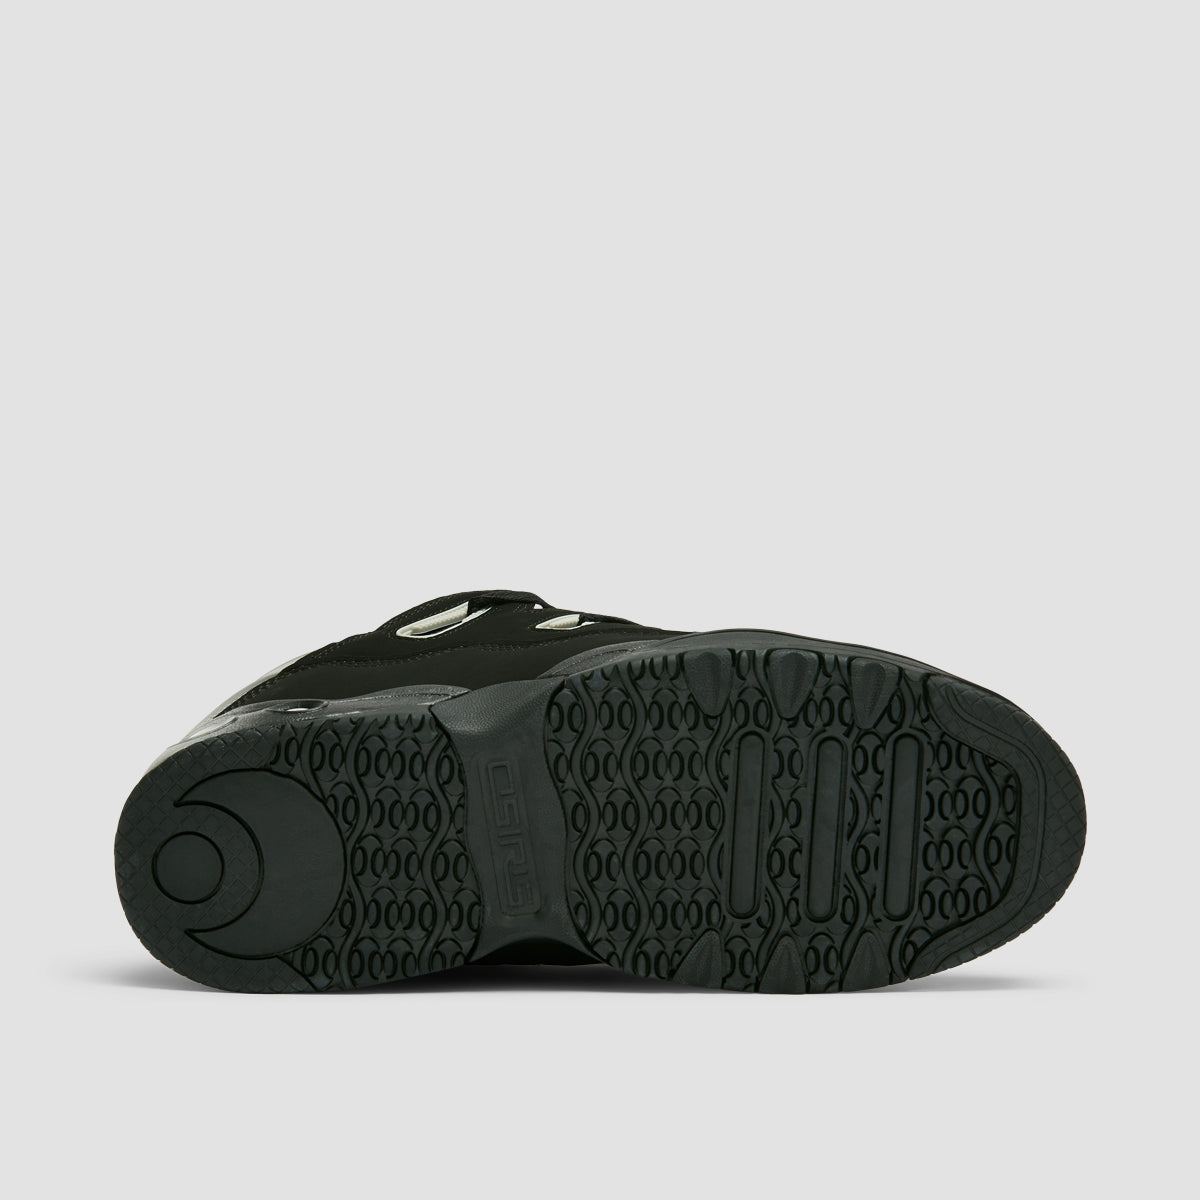 Osiris D3 OG Shoes - Black/Grey/Fade